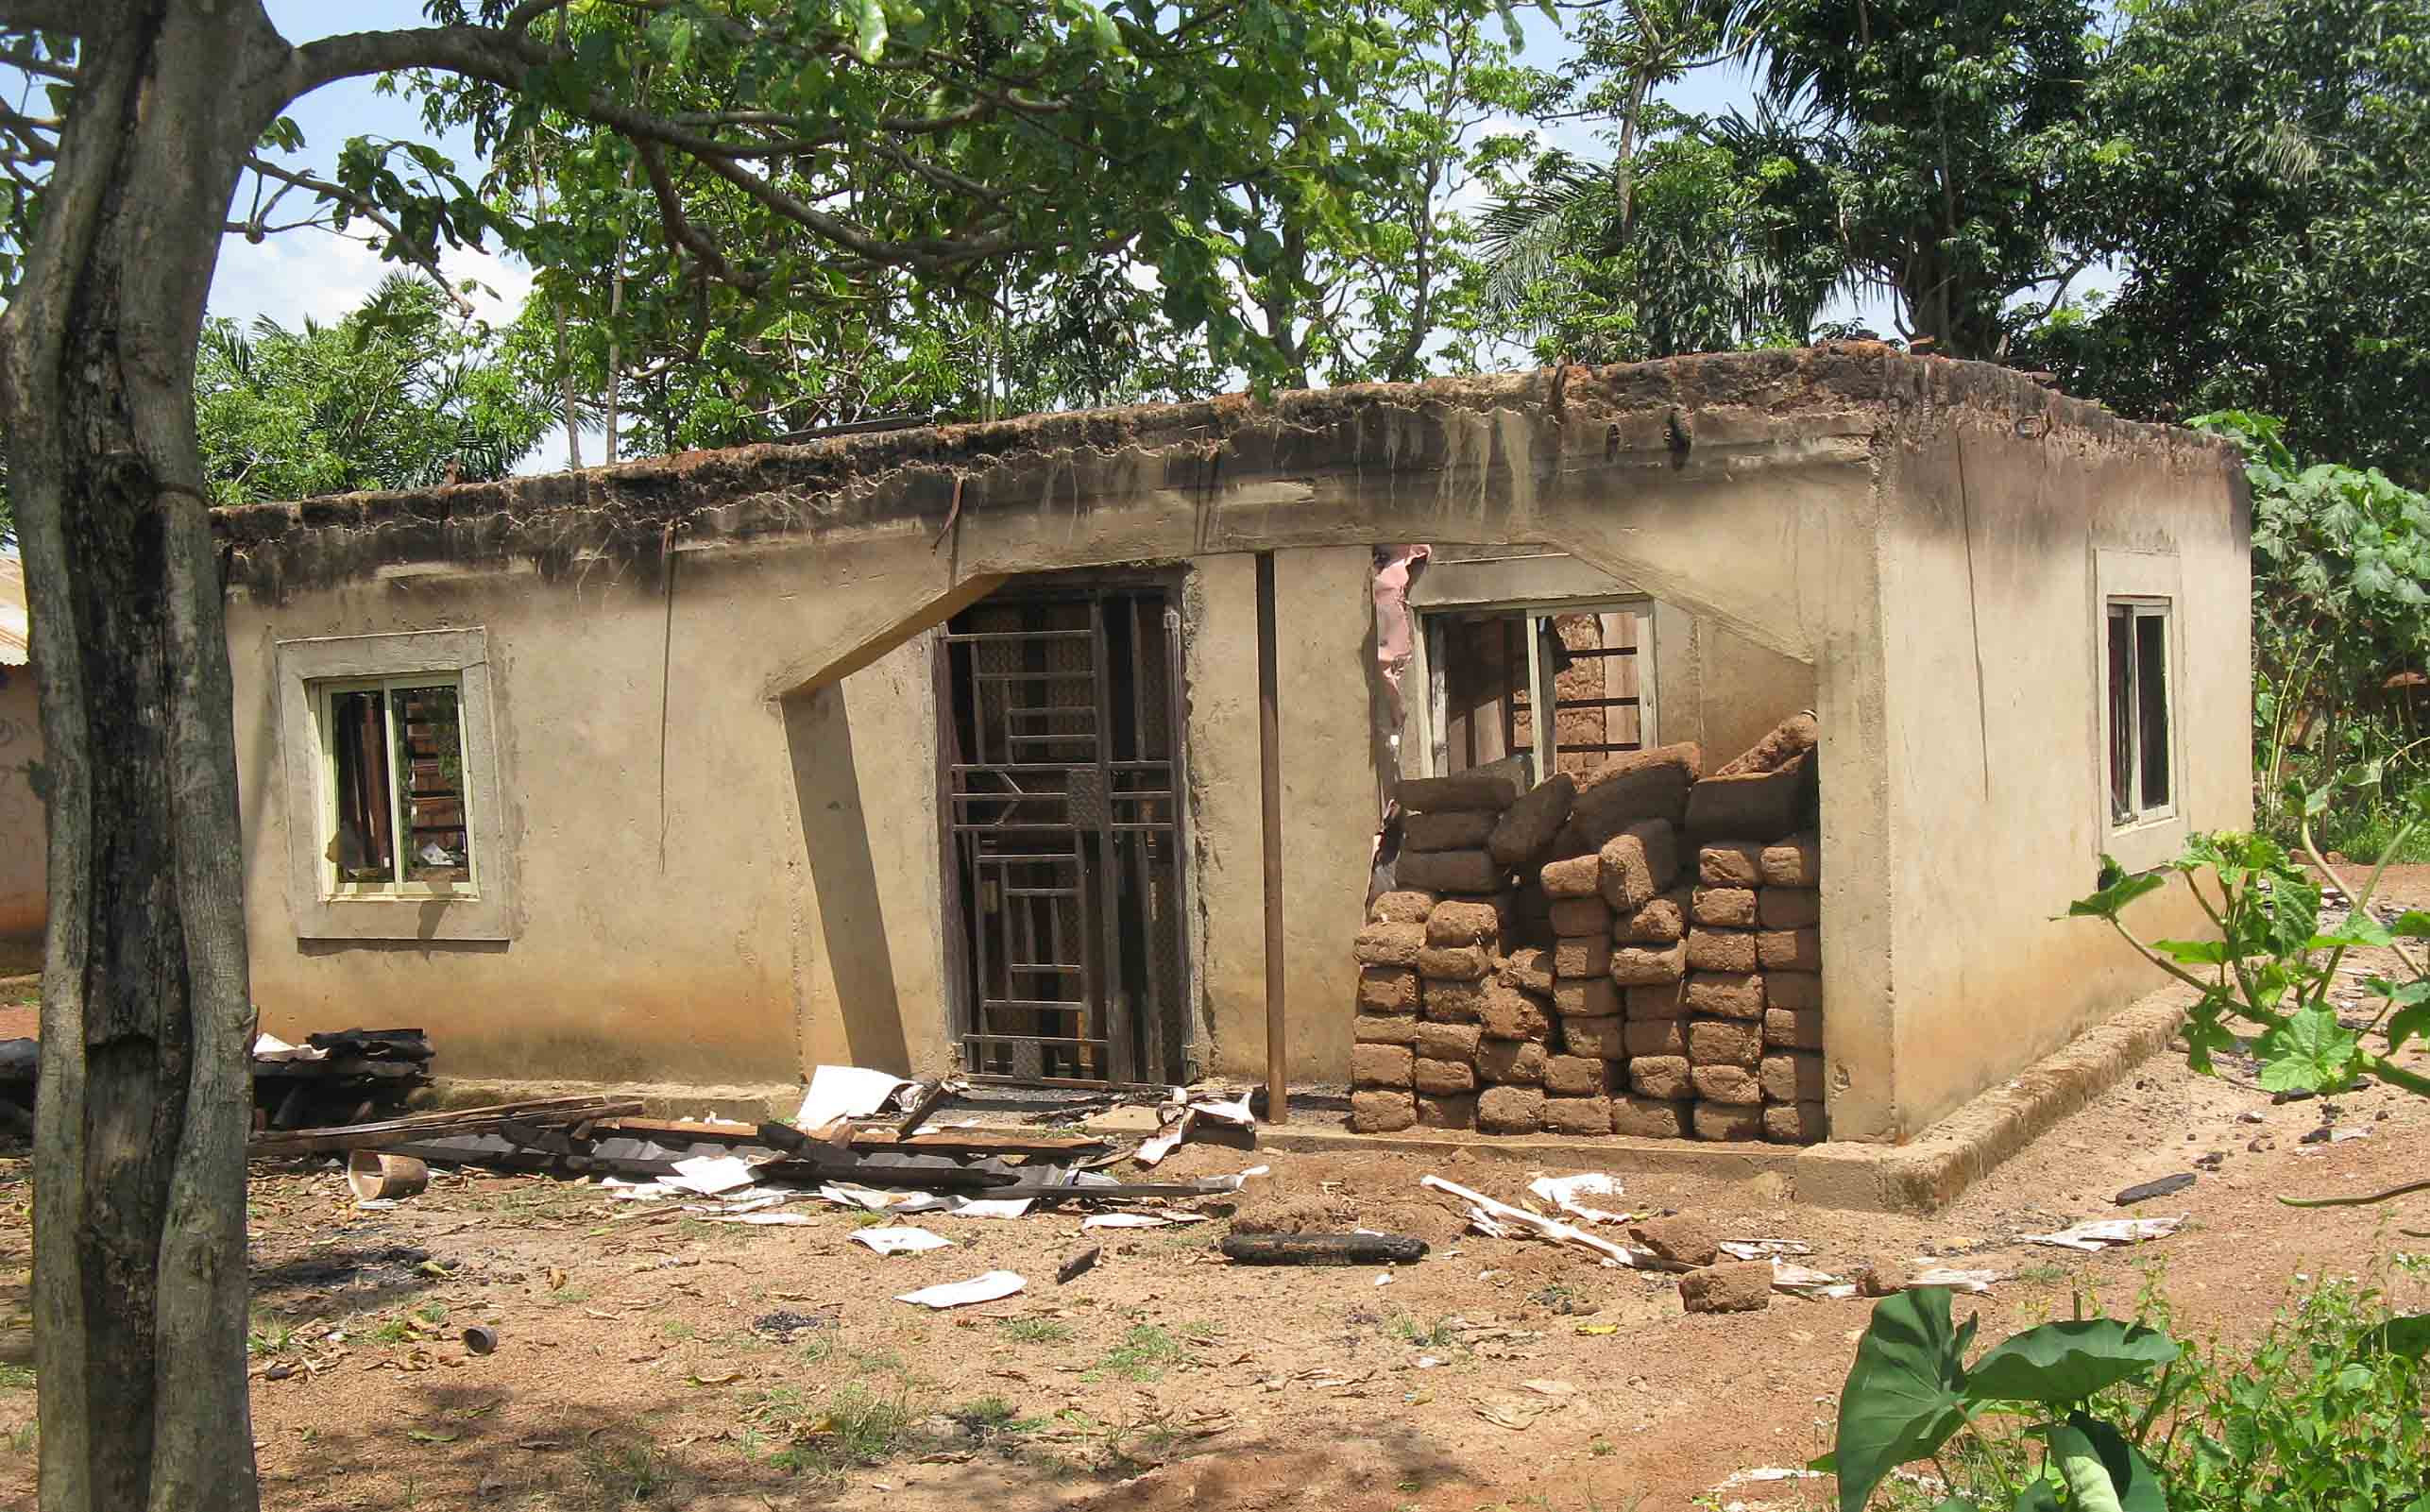 House destroyed in Dogon Fili, Kaduna state, by Muslim Fulani herdsmen. (Morning Star News)